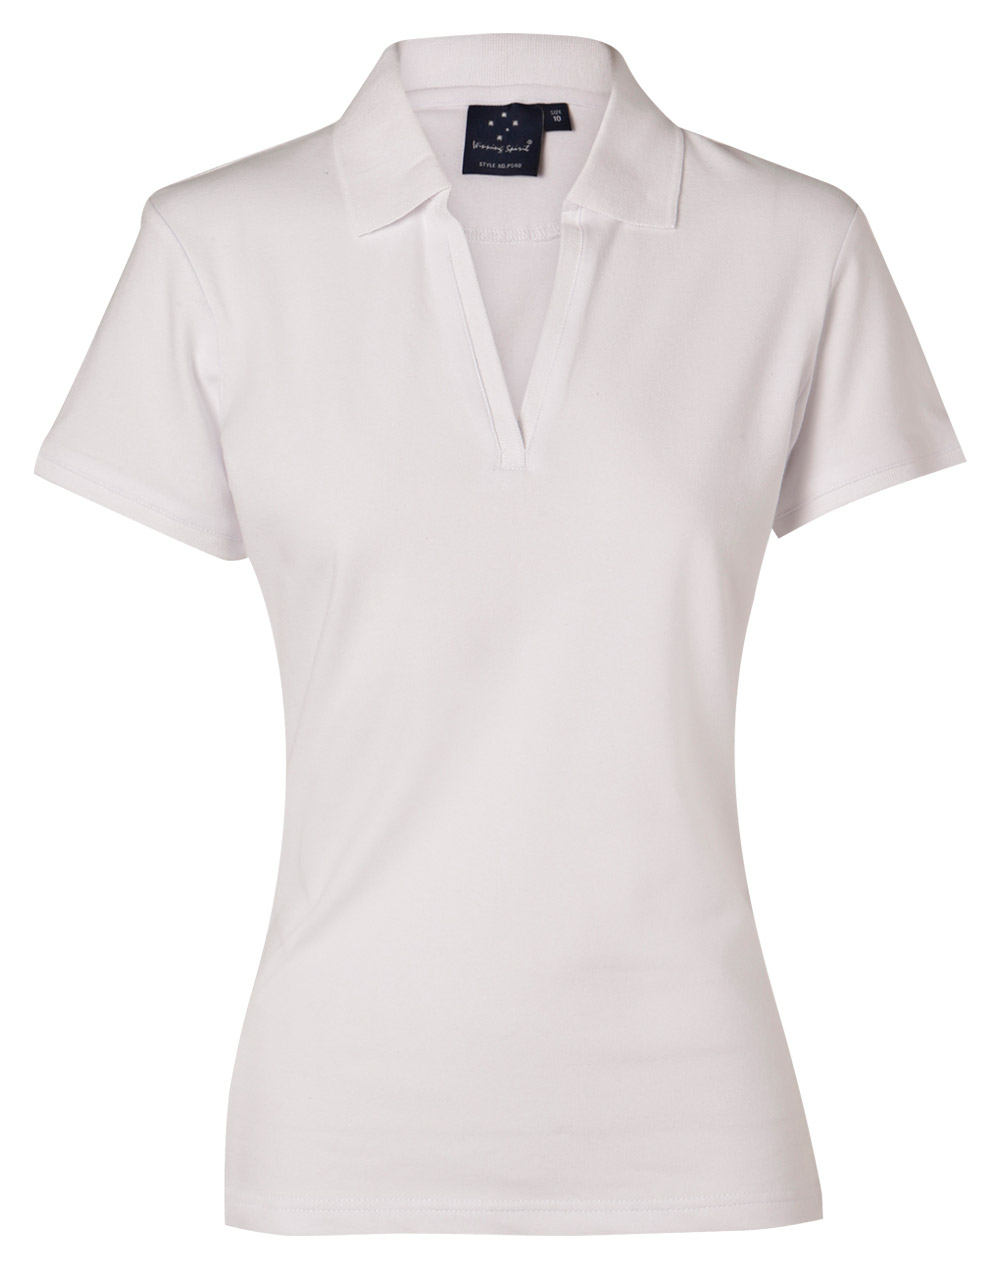 Women's Longbeach Cotton Short Sleeve Polo - White - Uniform Edit